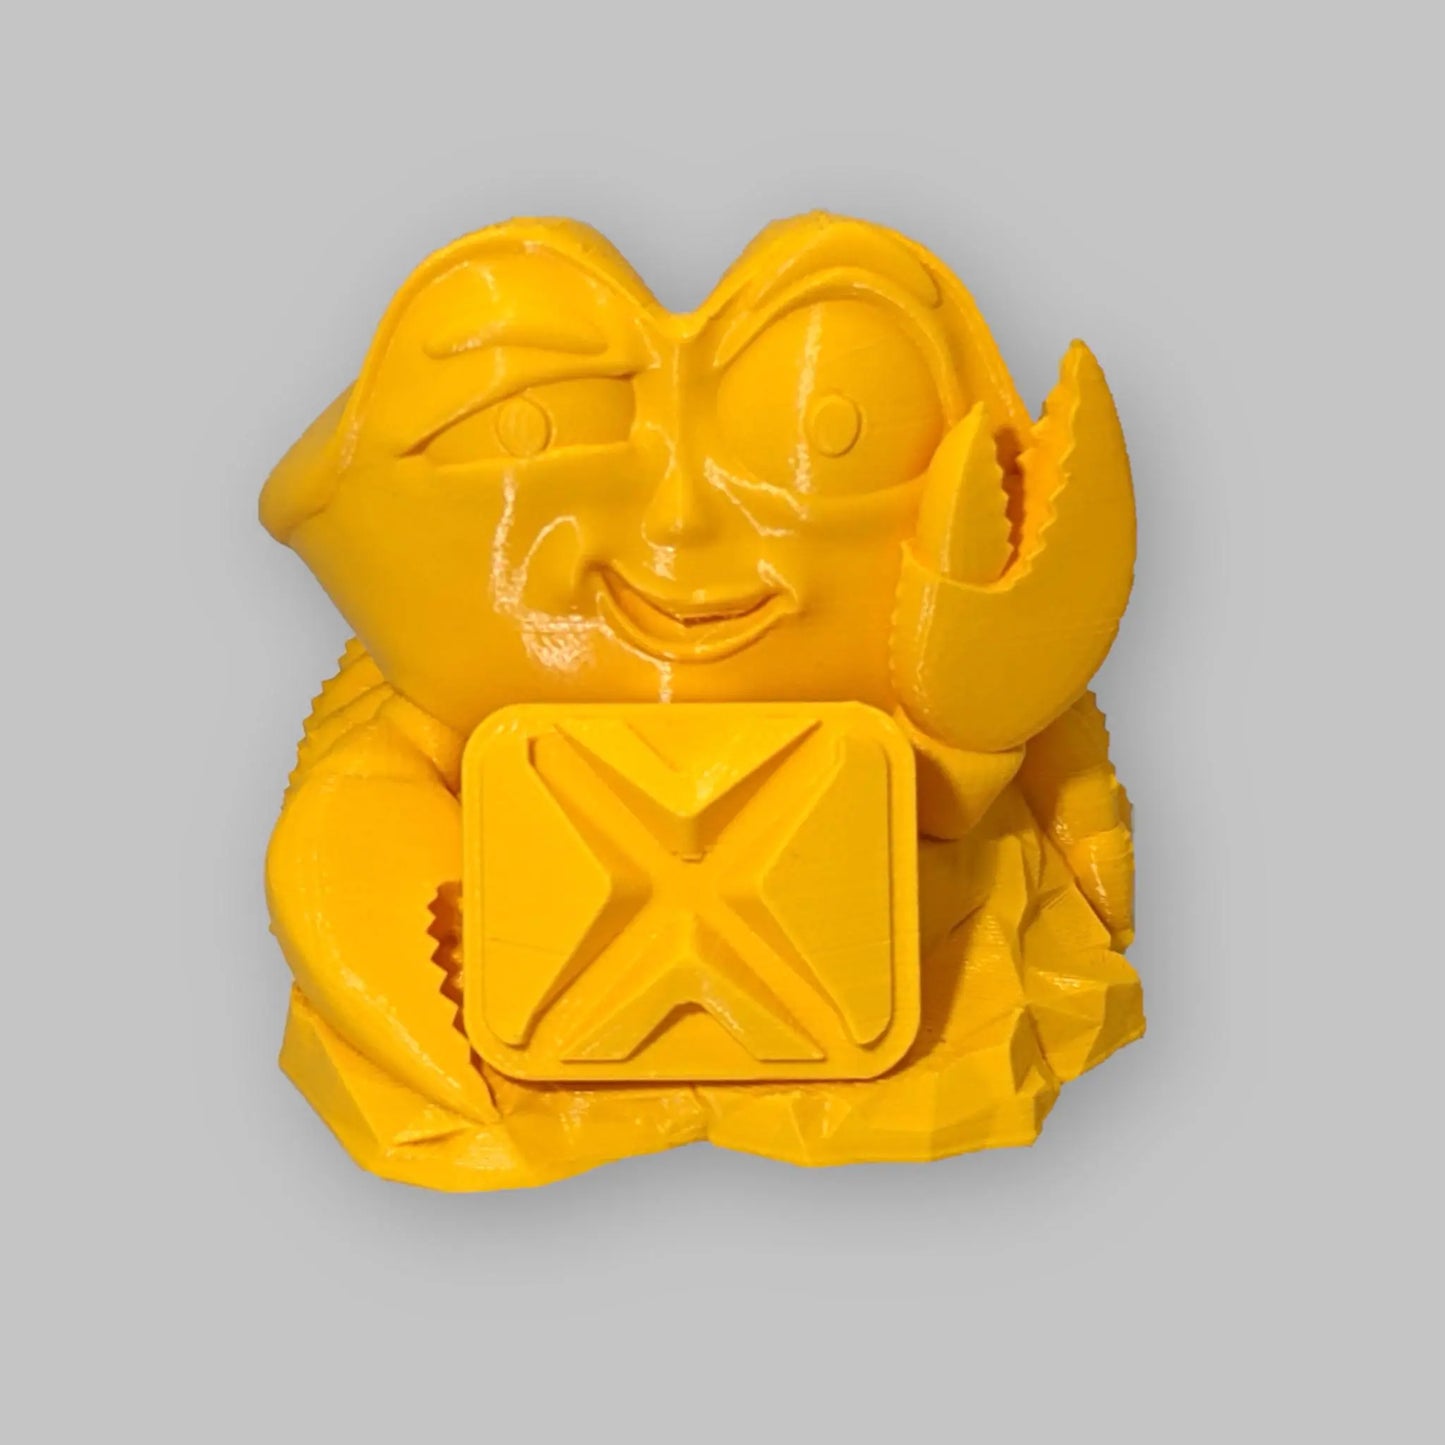 Green Bay Yellow PLA COEX 3D